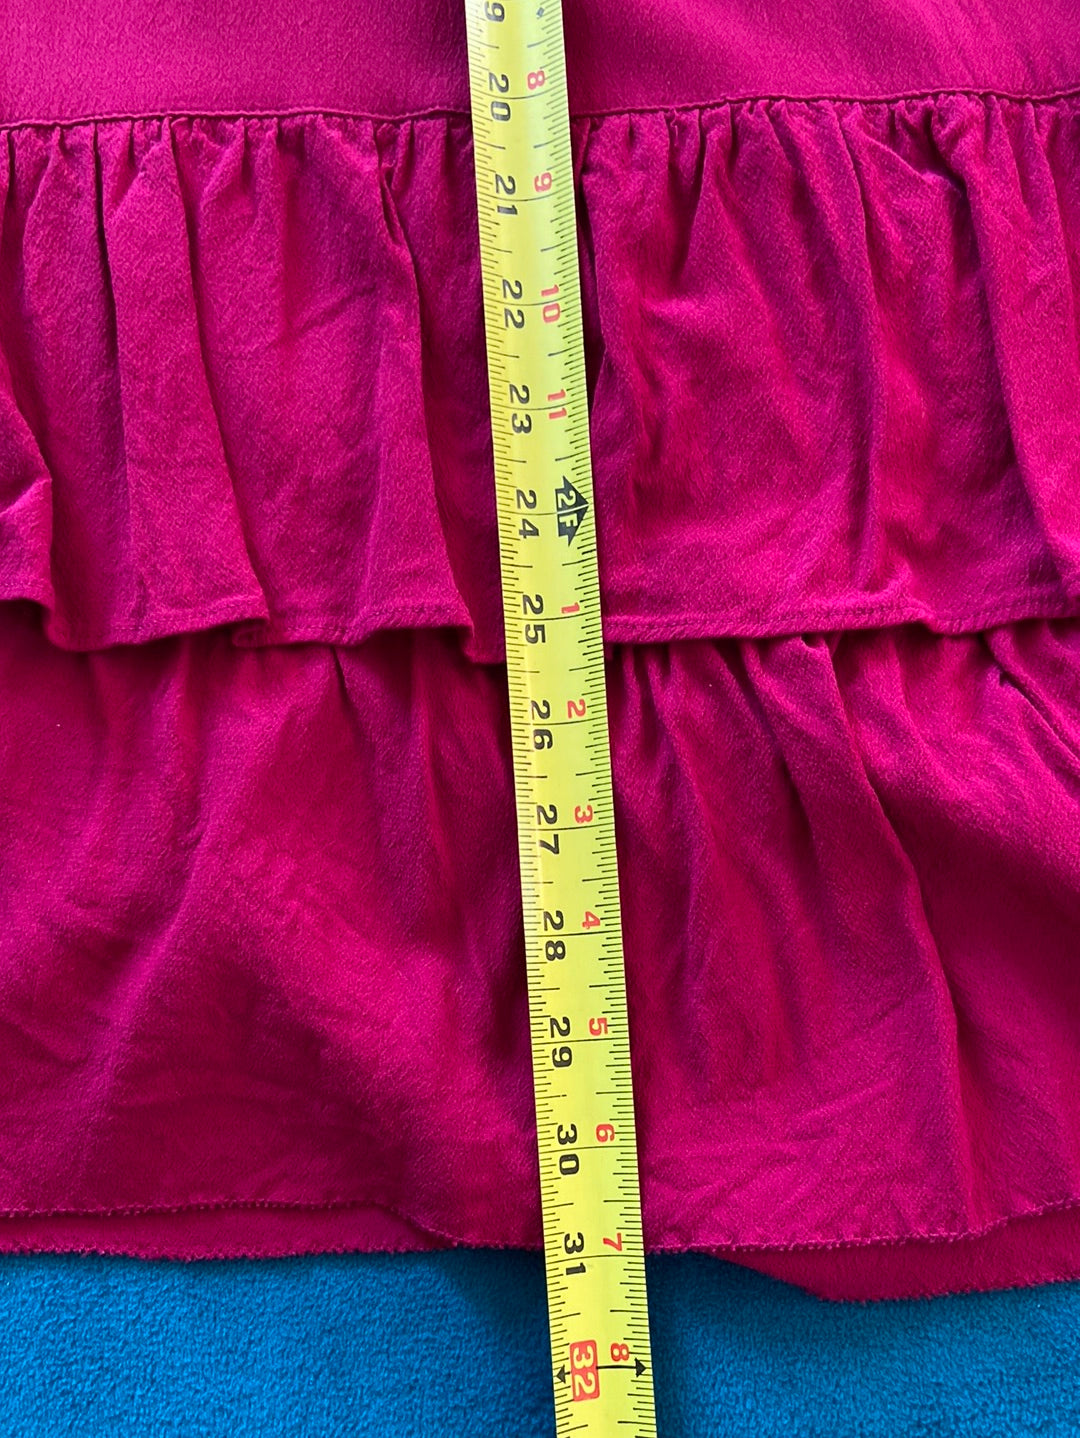 PINK PERFECTION Gap Hot Pink Dress Size XSP